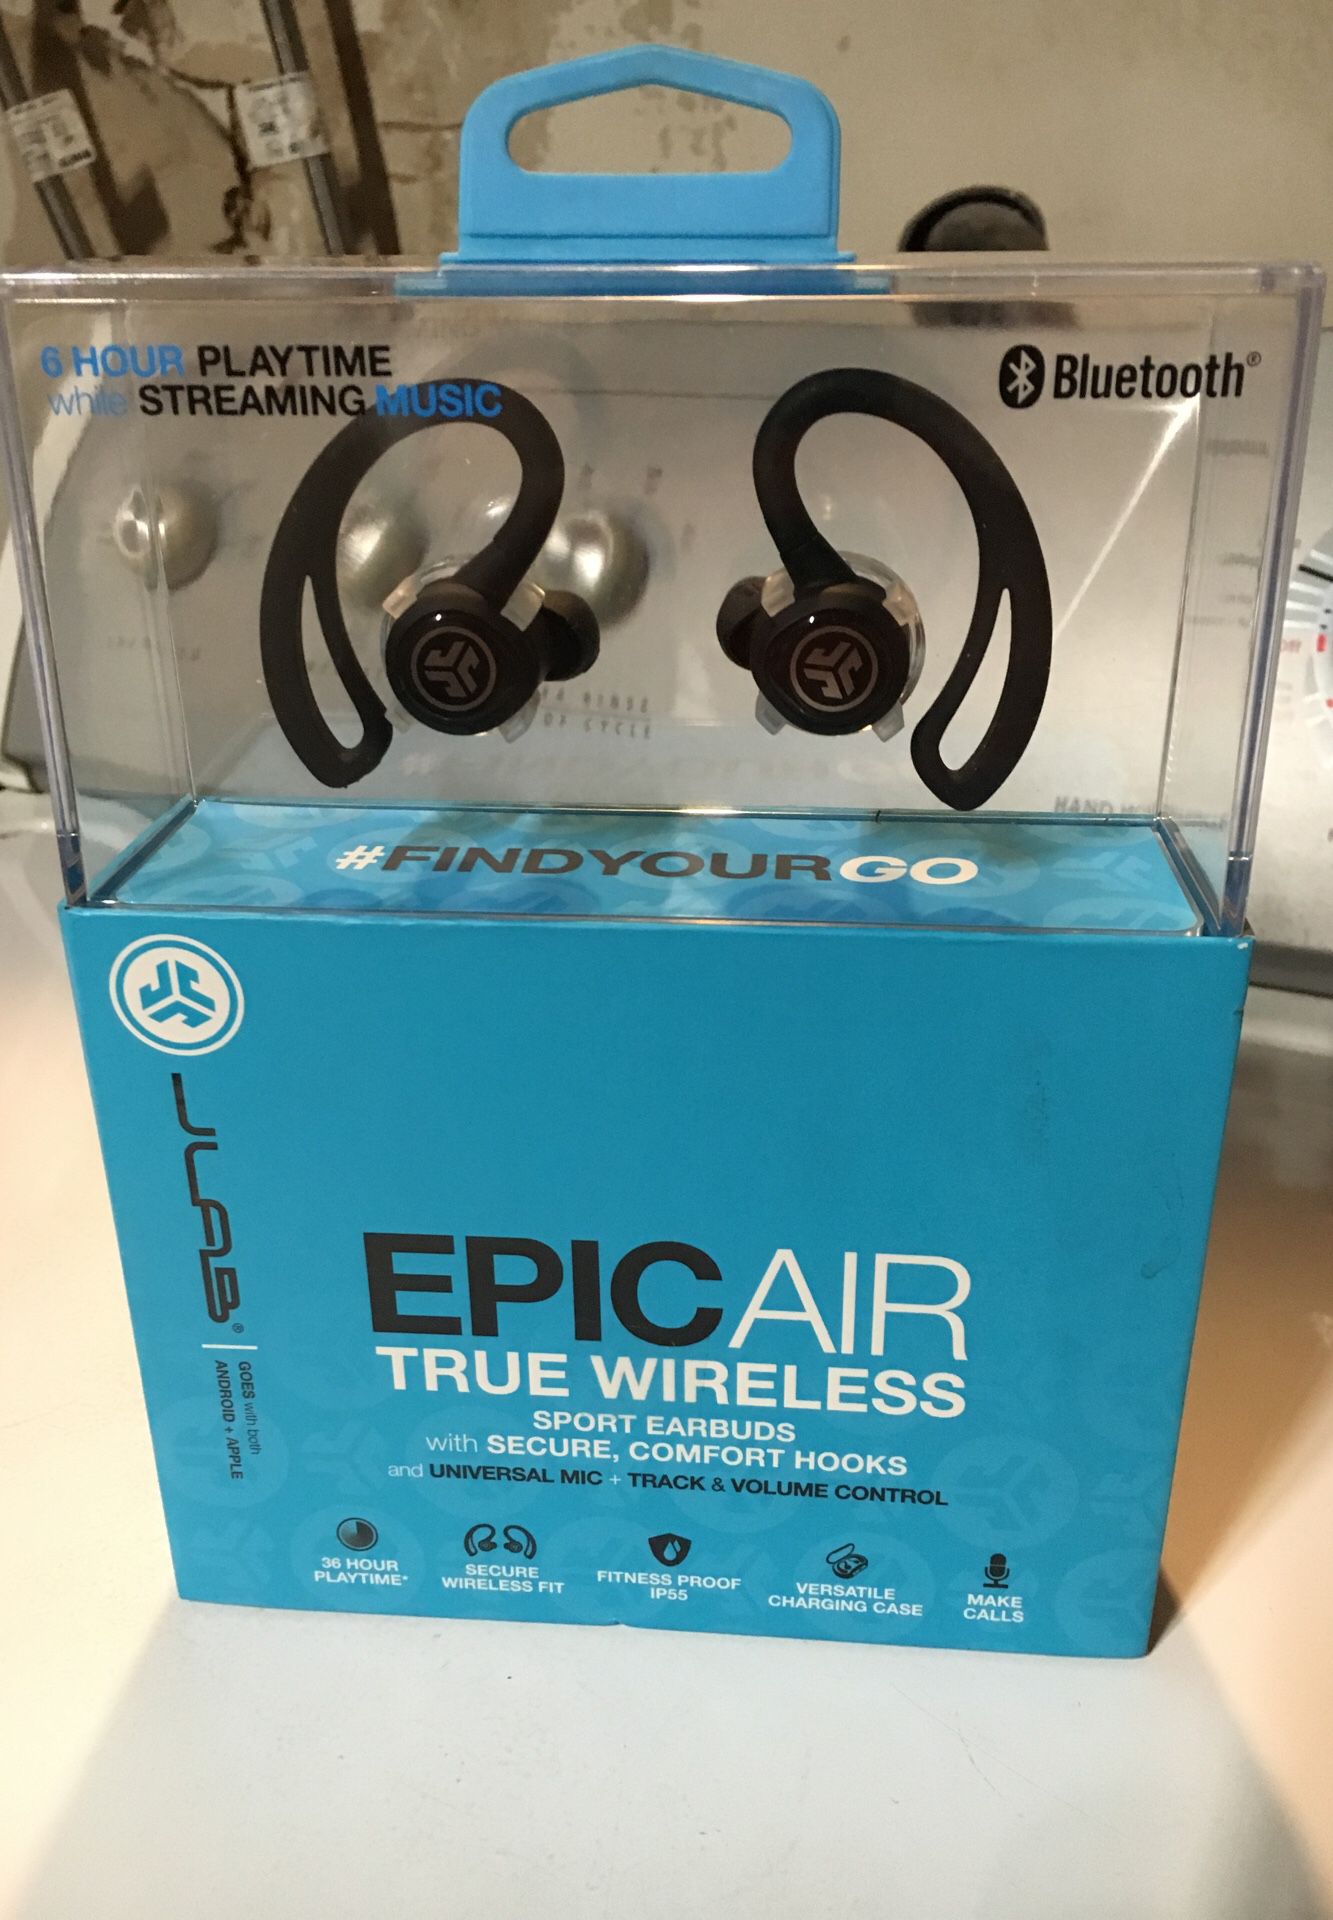 Epic air true wireless earbuds